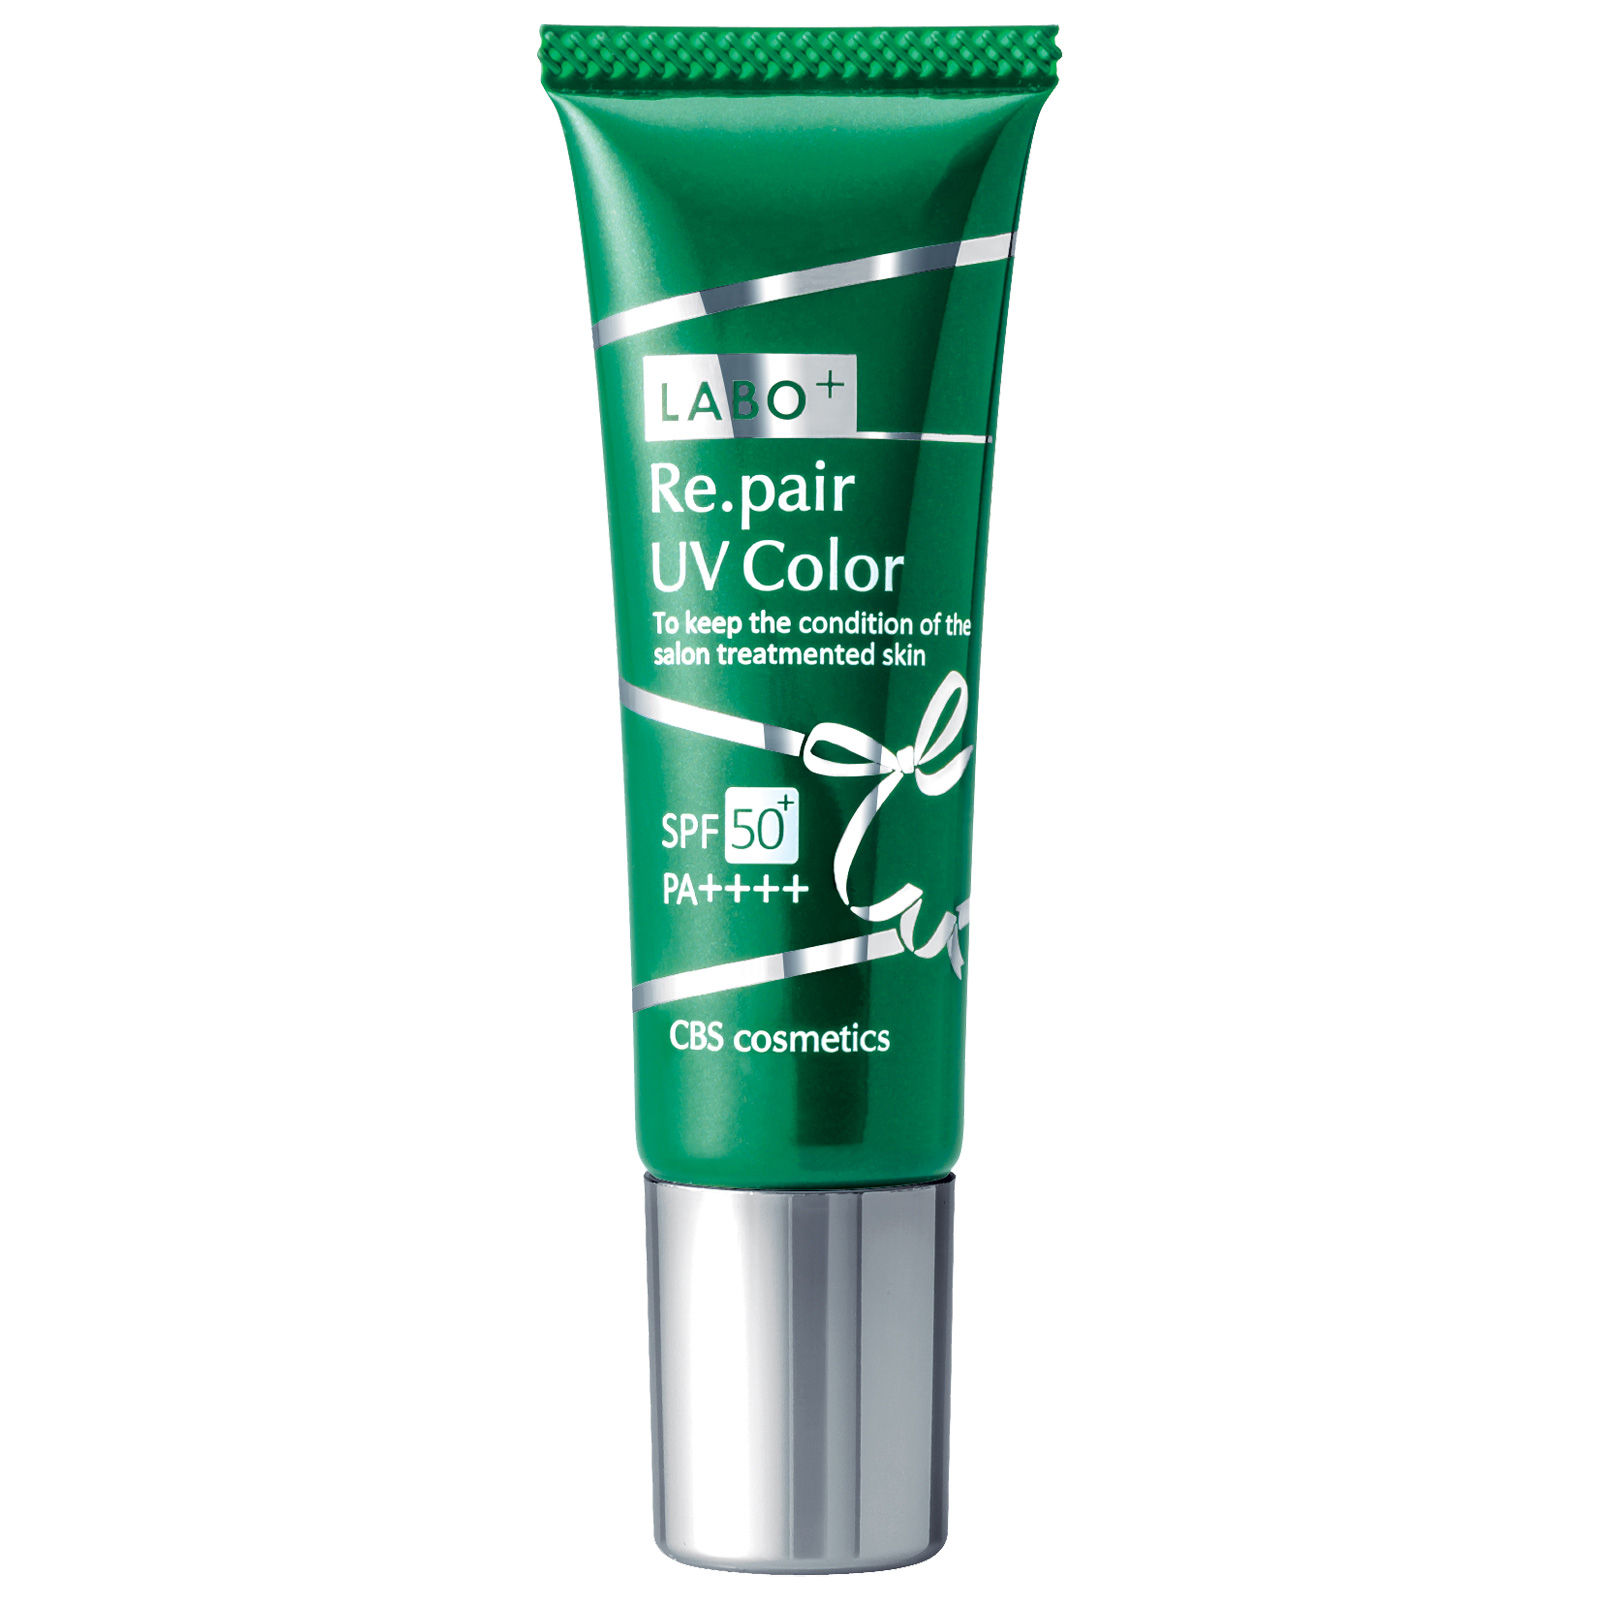 CBS Cosmetics LABO+ Re.pair UV Color Pink SPF 50 PA++++. Восстанавливающий солнцезащитный крем для лица Лабо+, розовый, 30 г